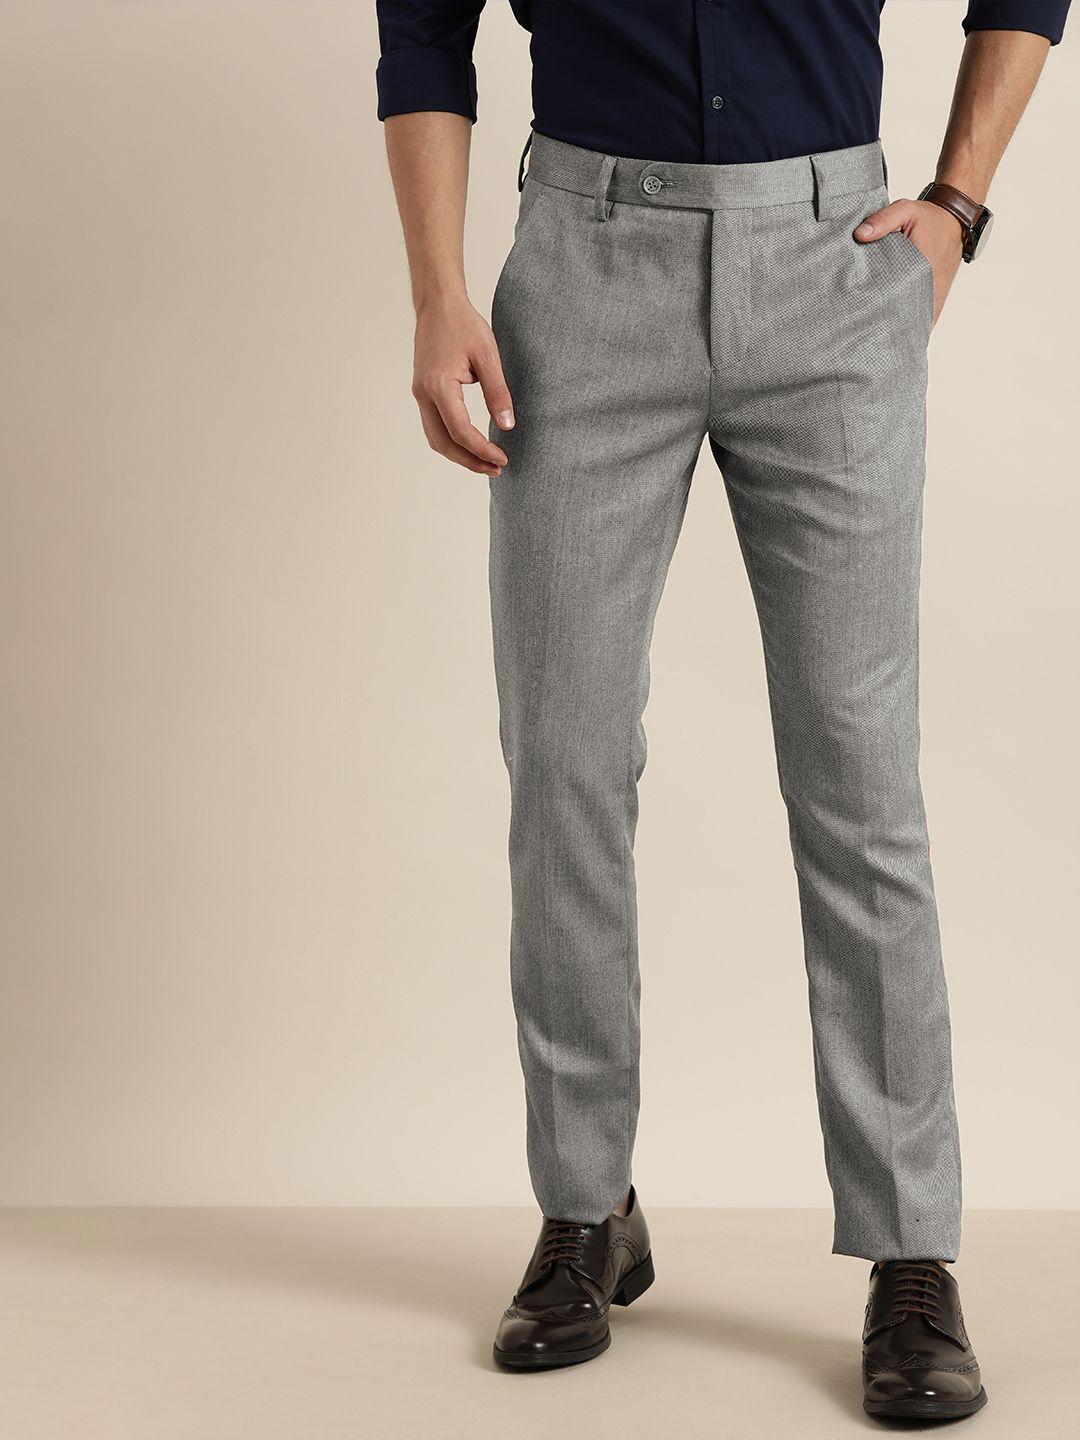 invictus men black & grey regular fit striped formal trousers